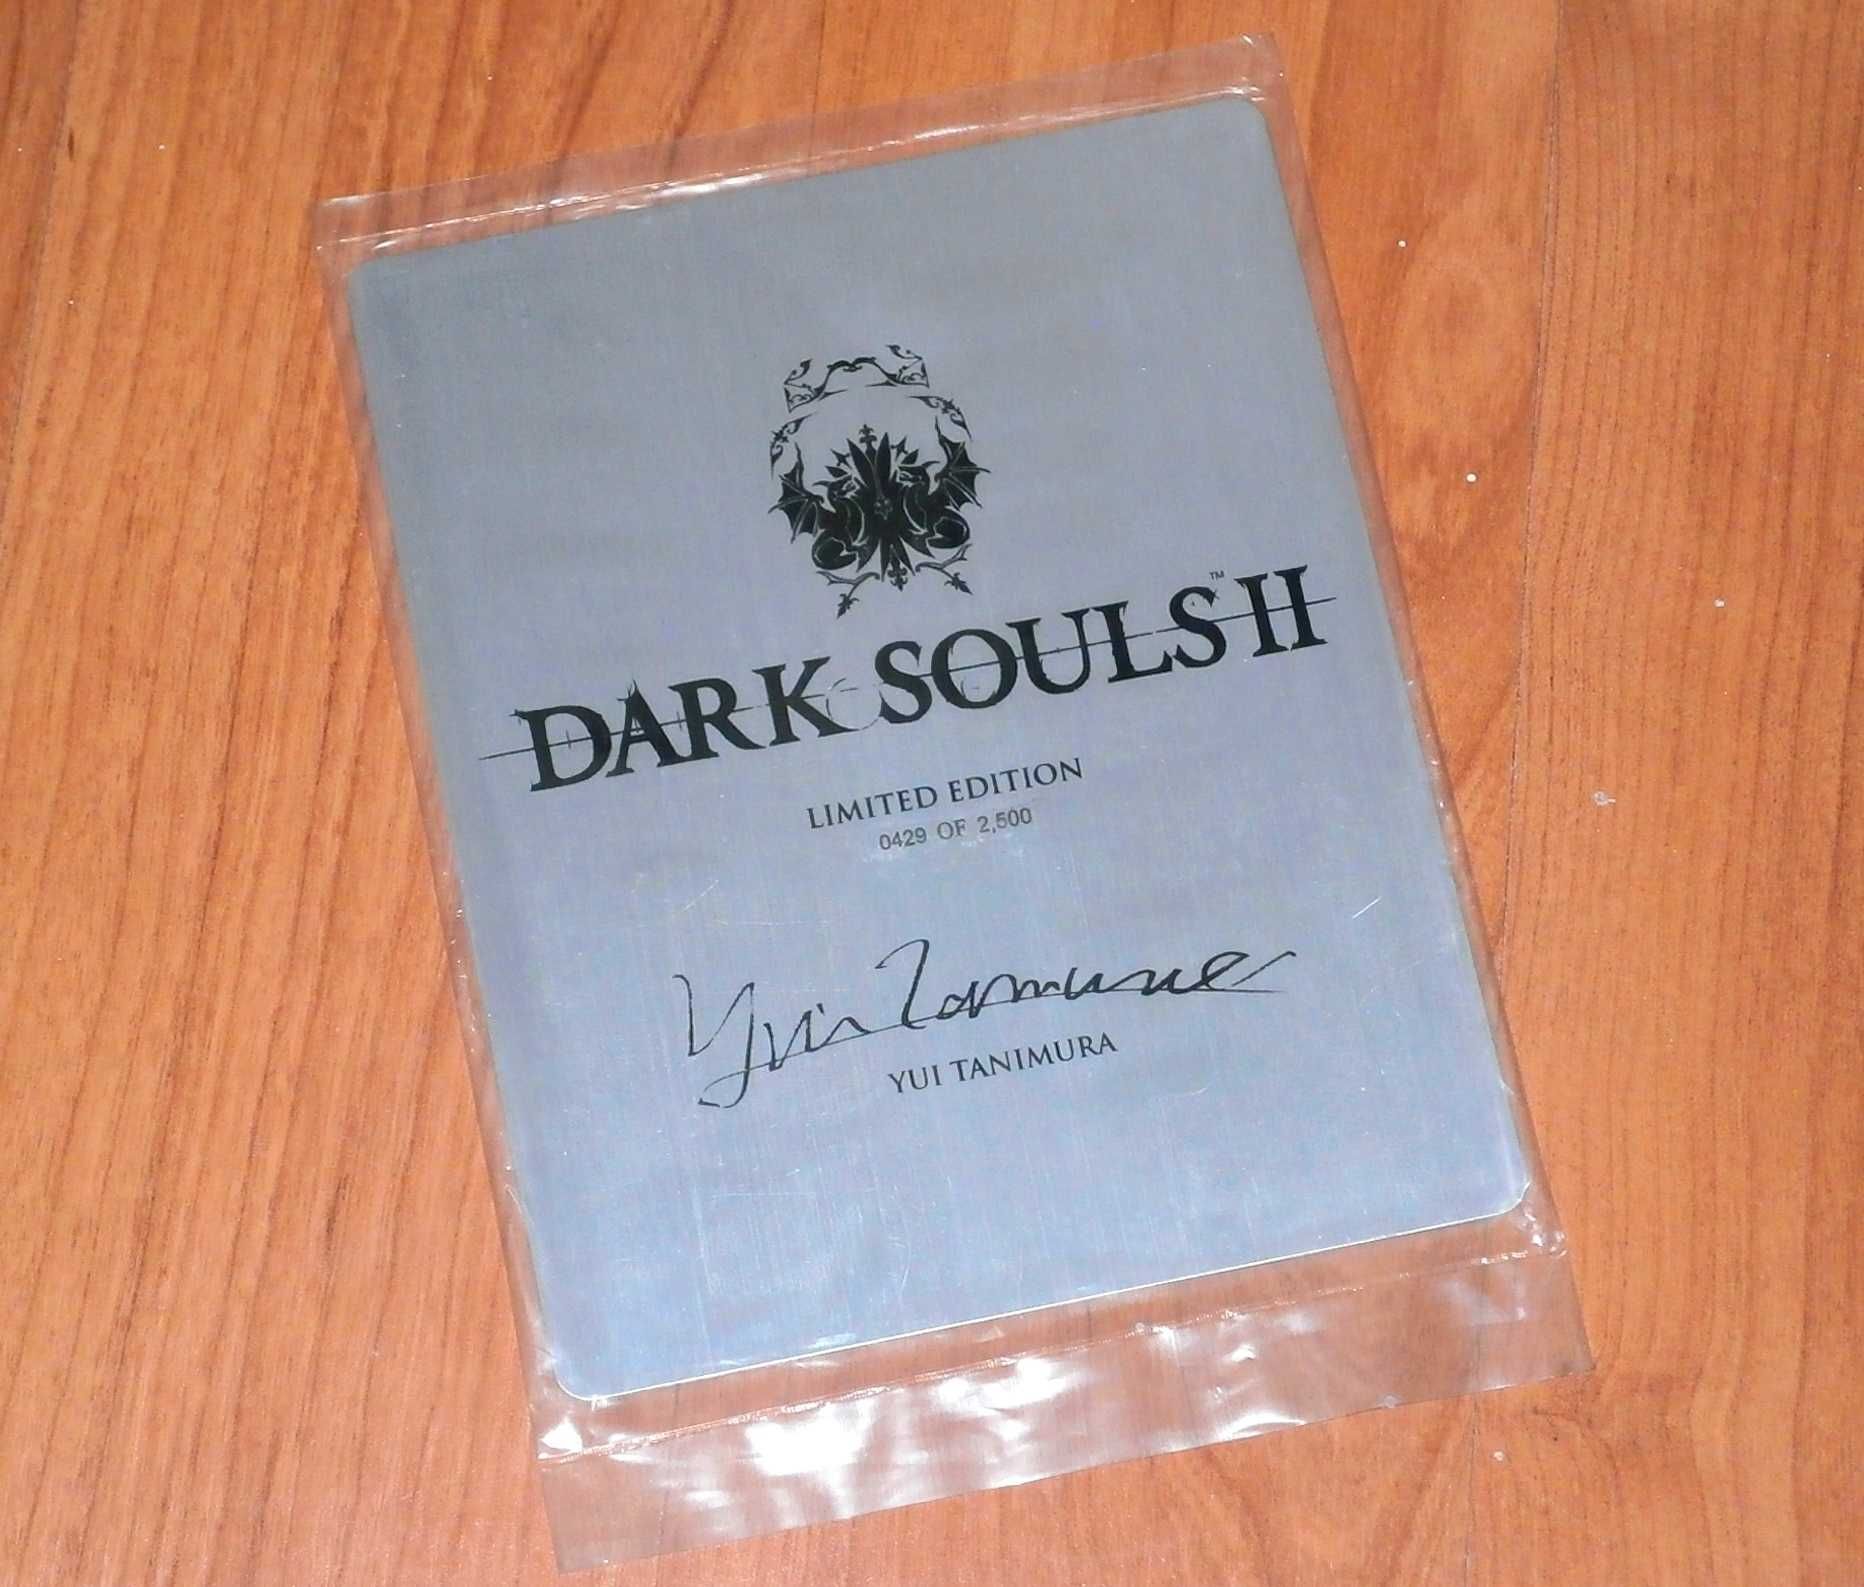 Dark Souls II - Card metal inseriat Yui Tanimura item de colectie rar